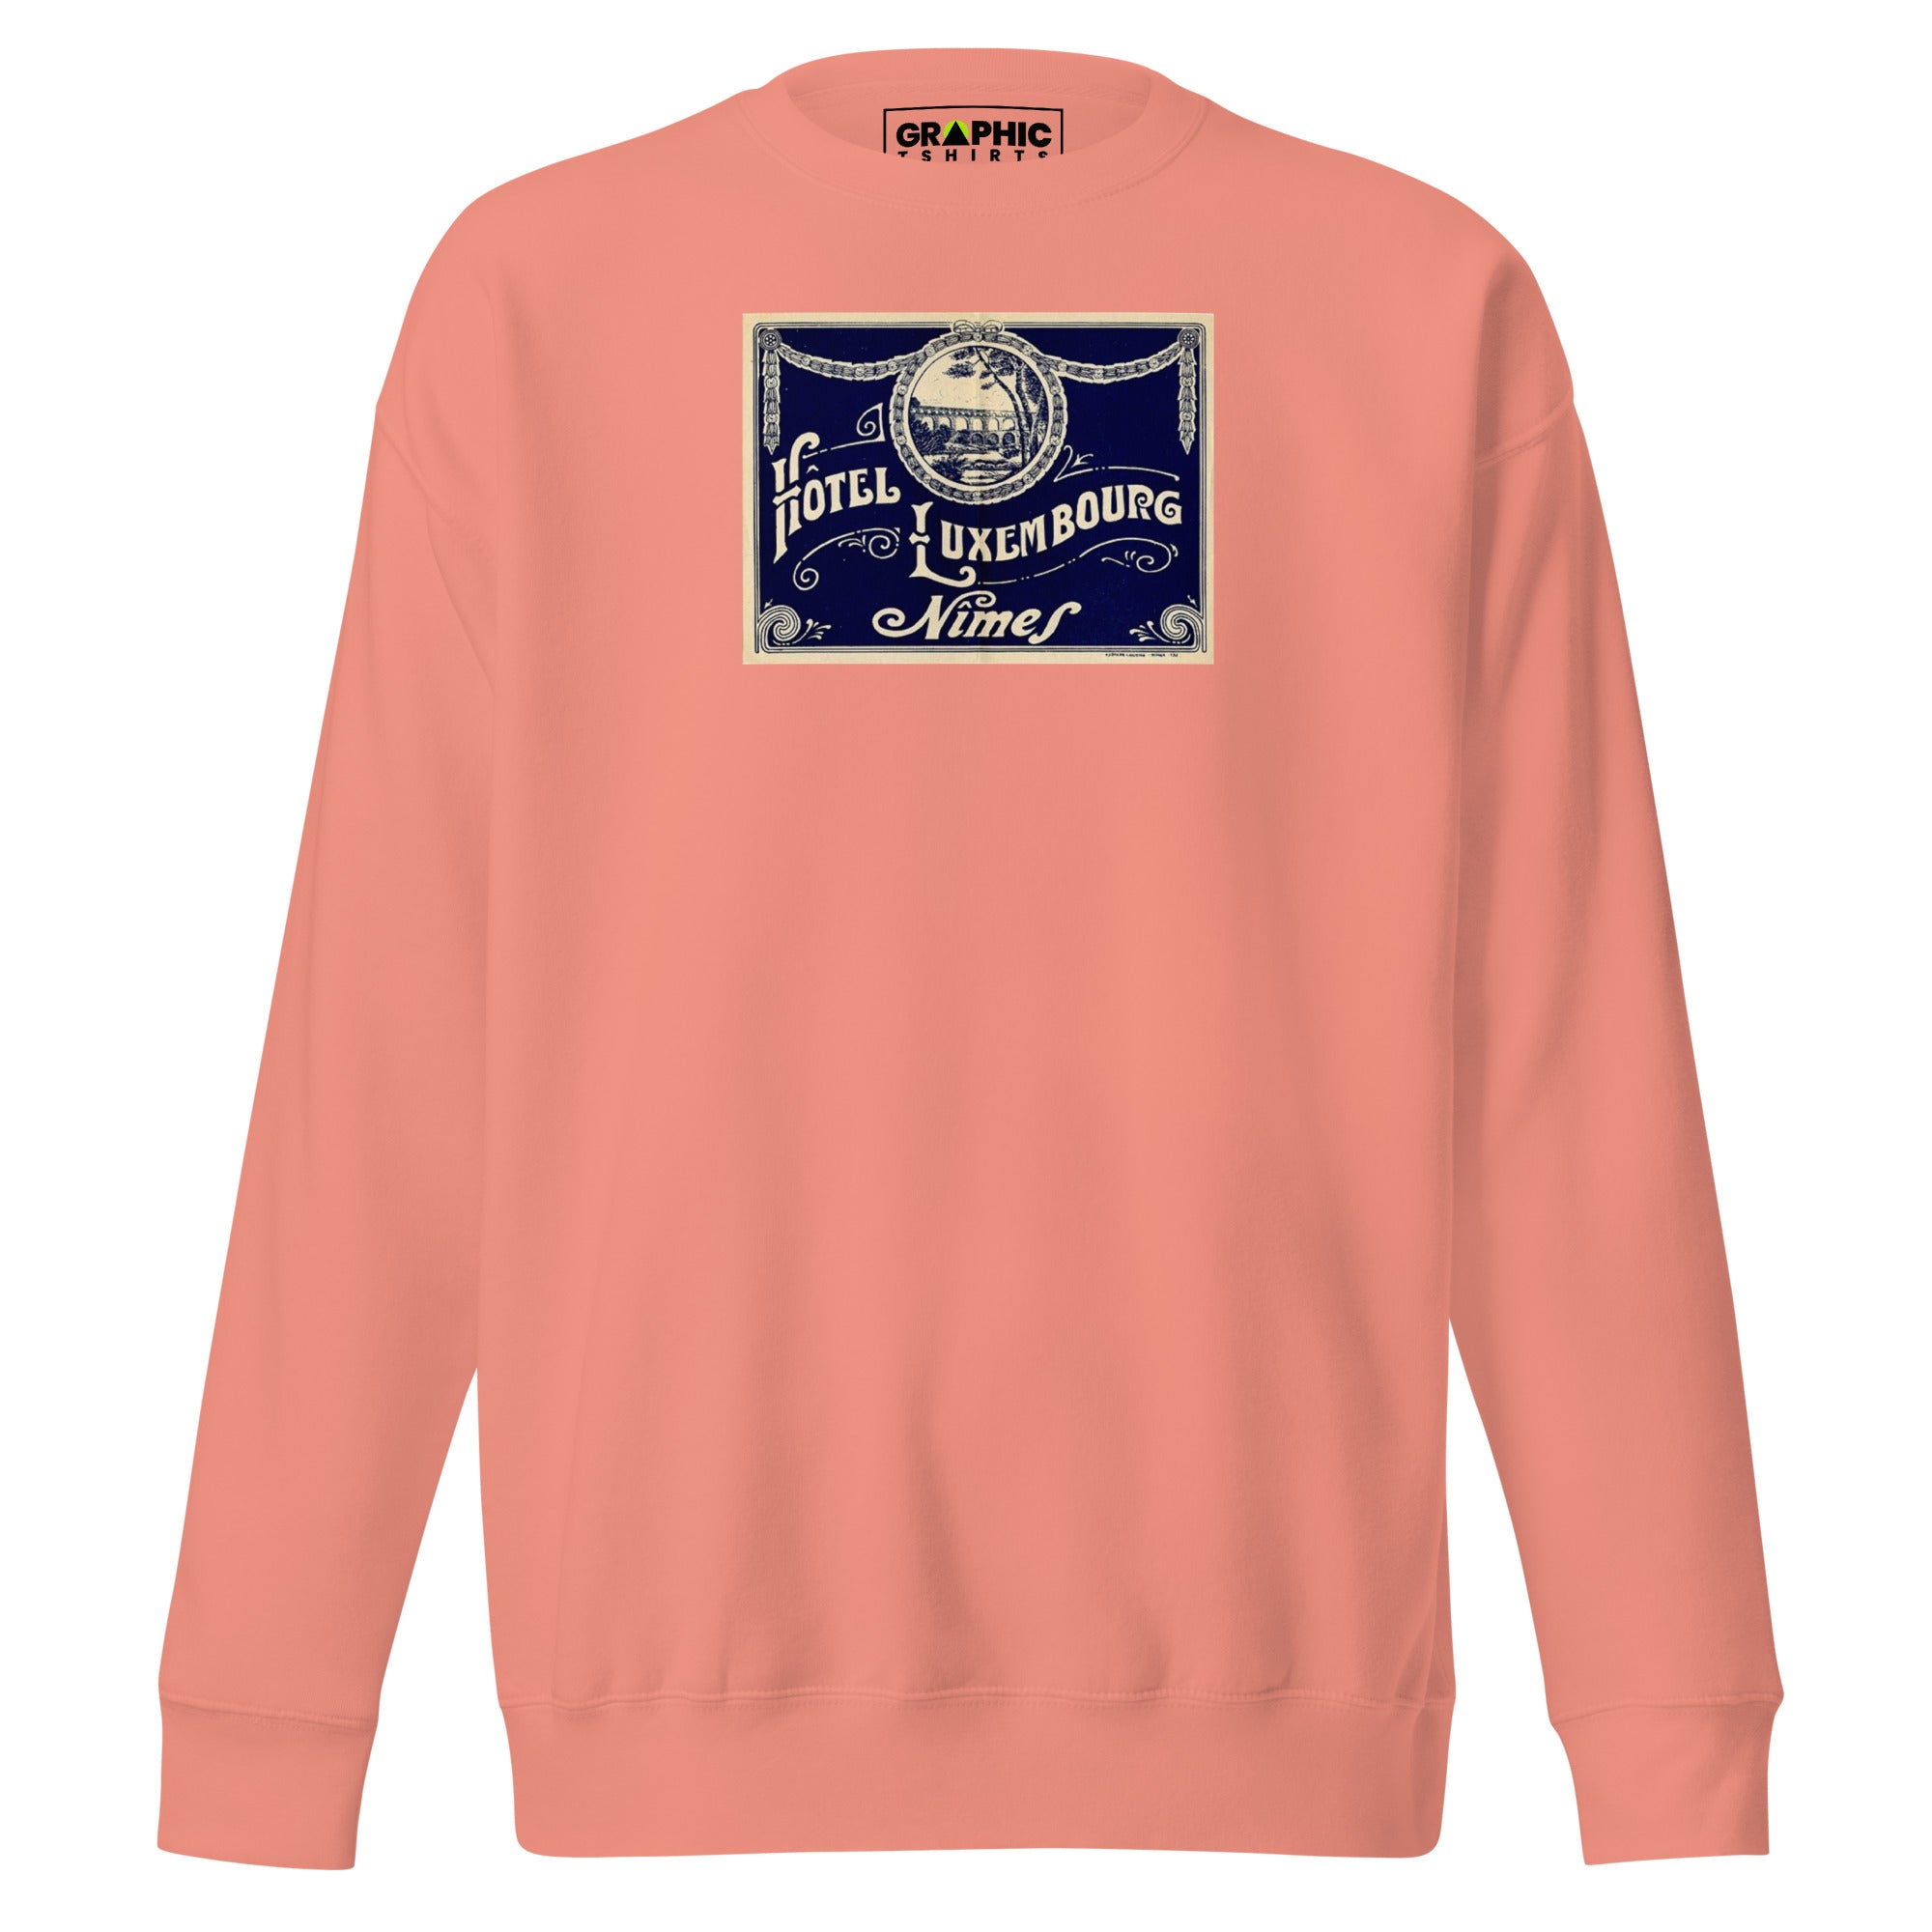 Unisex Premium Sweatshirt - Hotel Luxumbourg Nimes Vintage - GRAPHIC T-SHIRTS